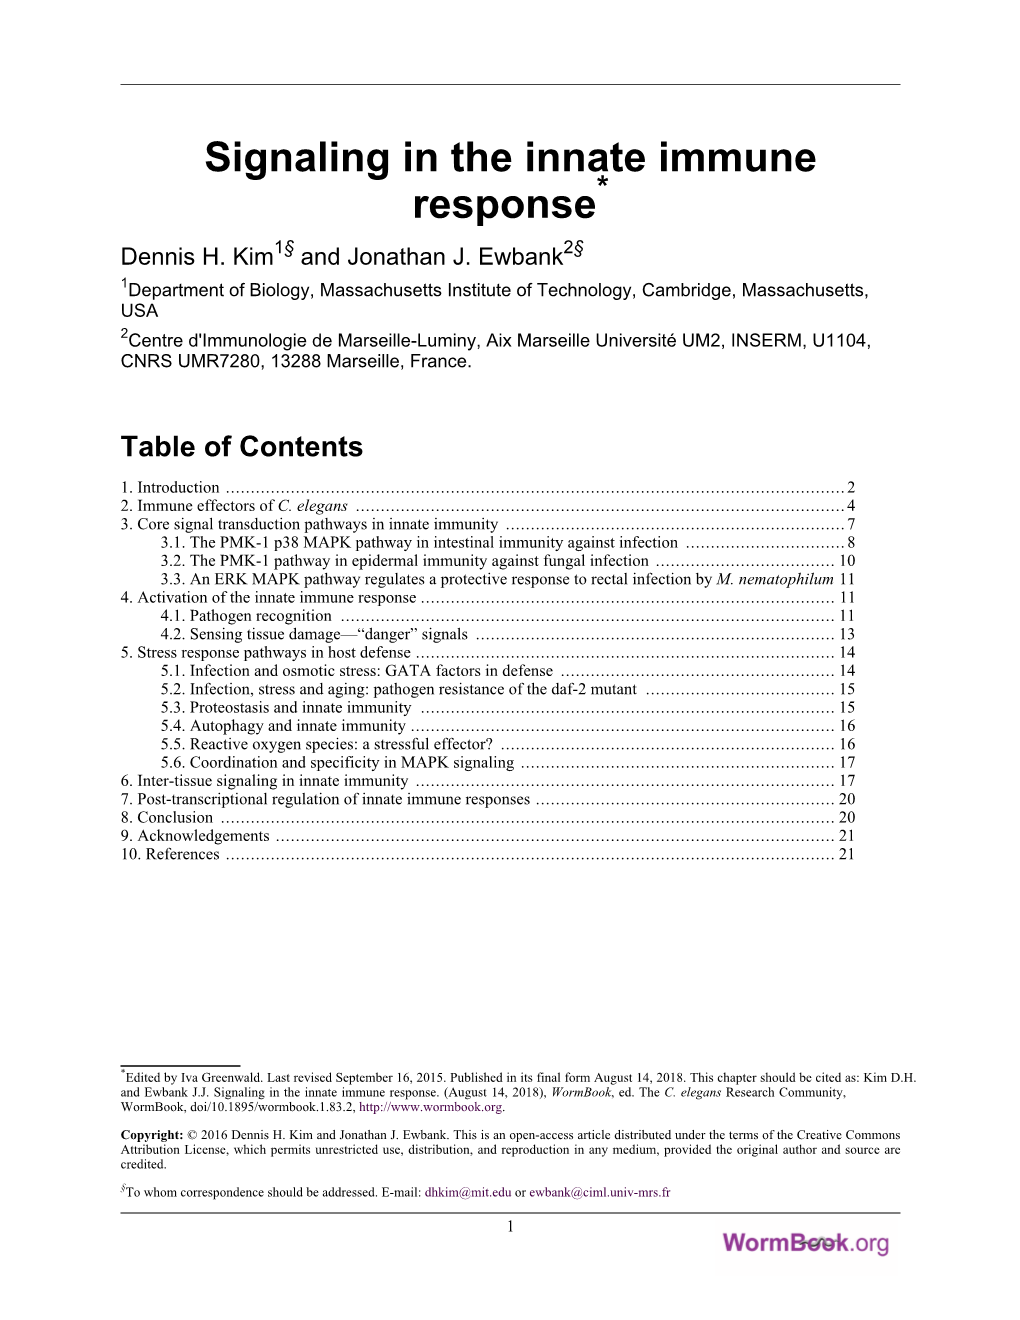 Signaling in the Innate Immune Response* Dennis H